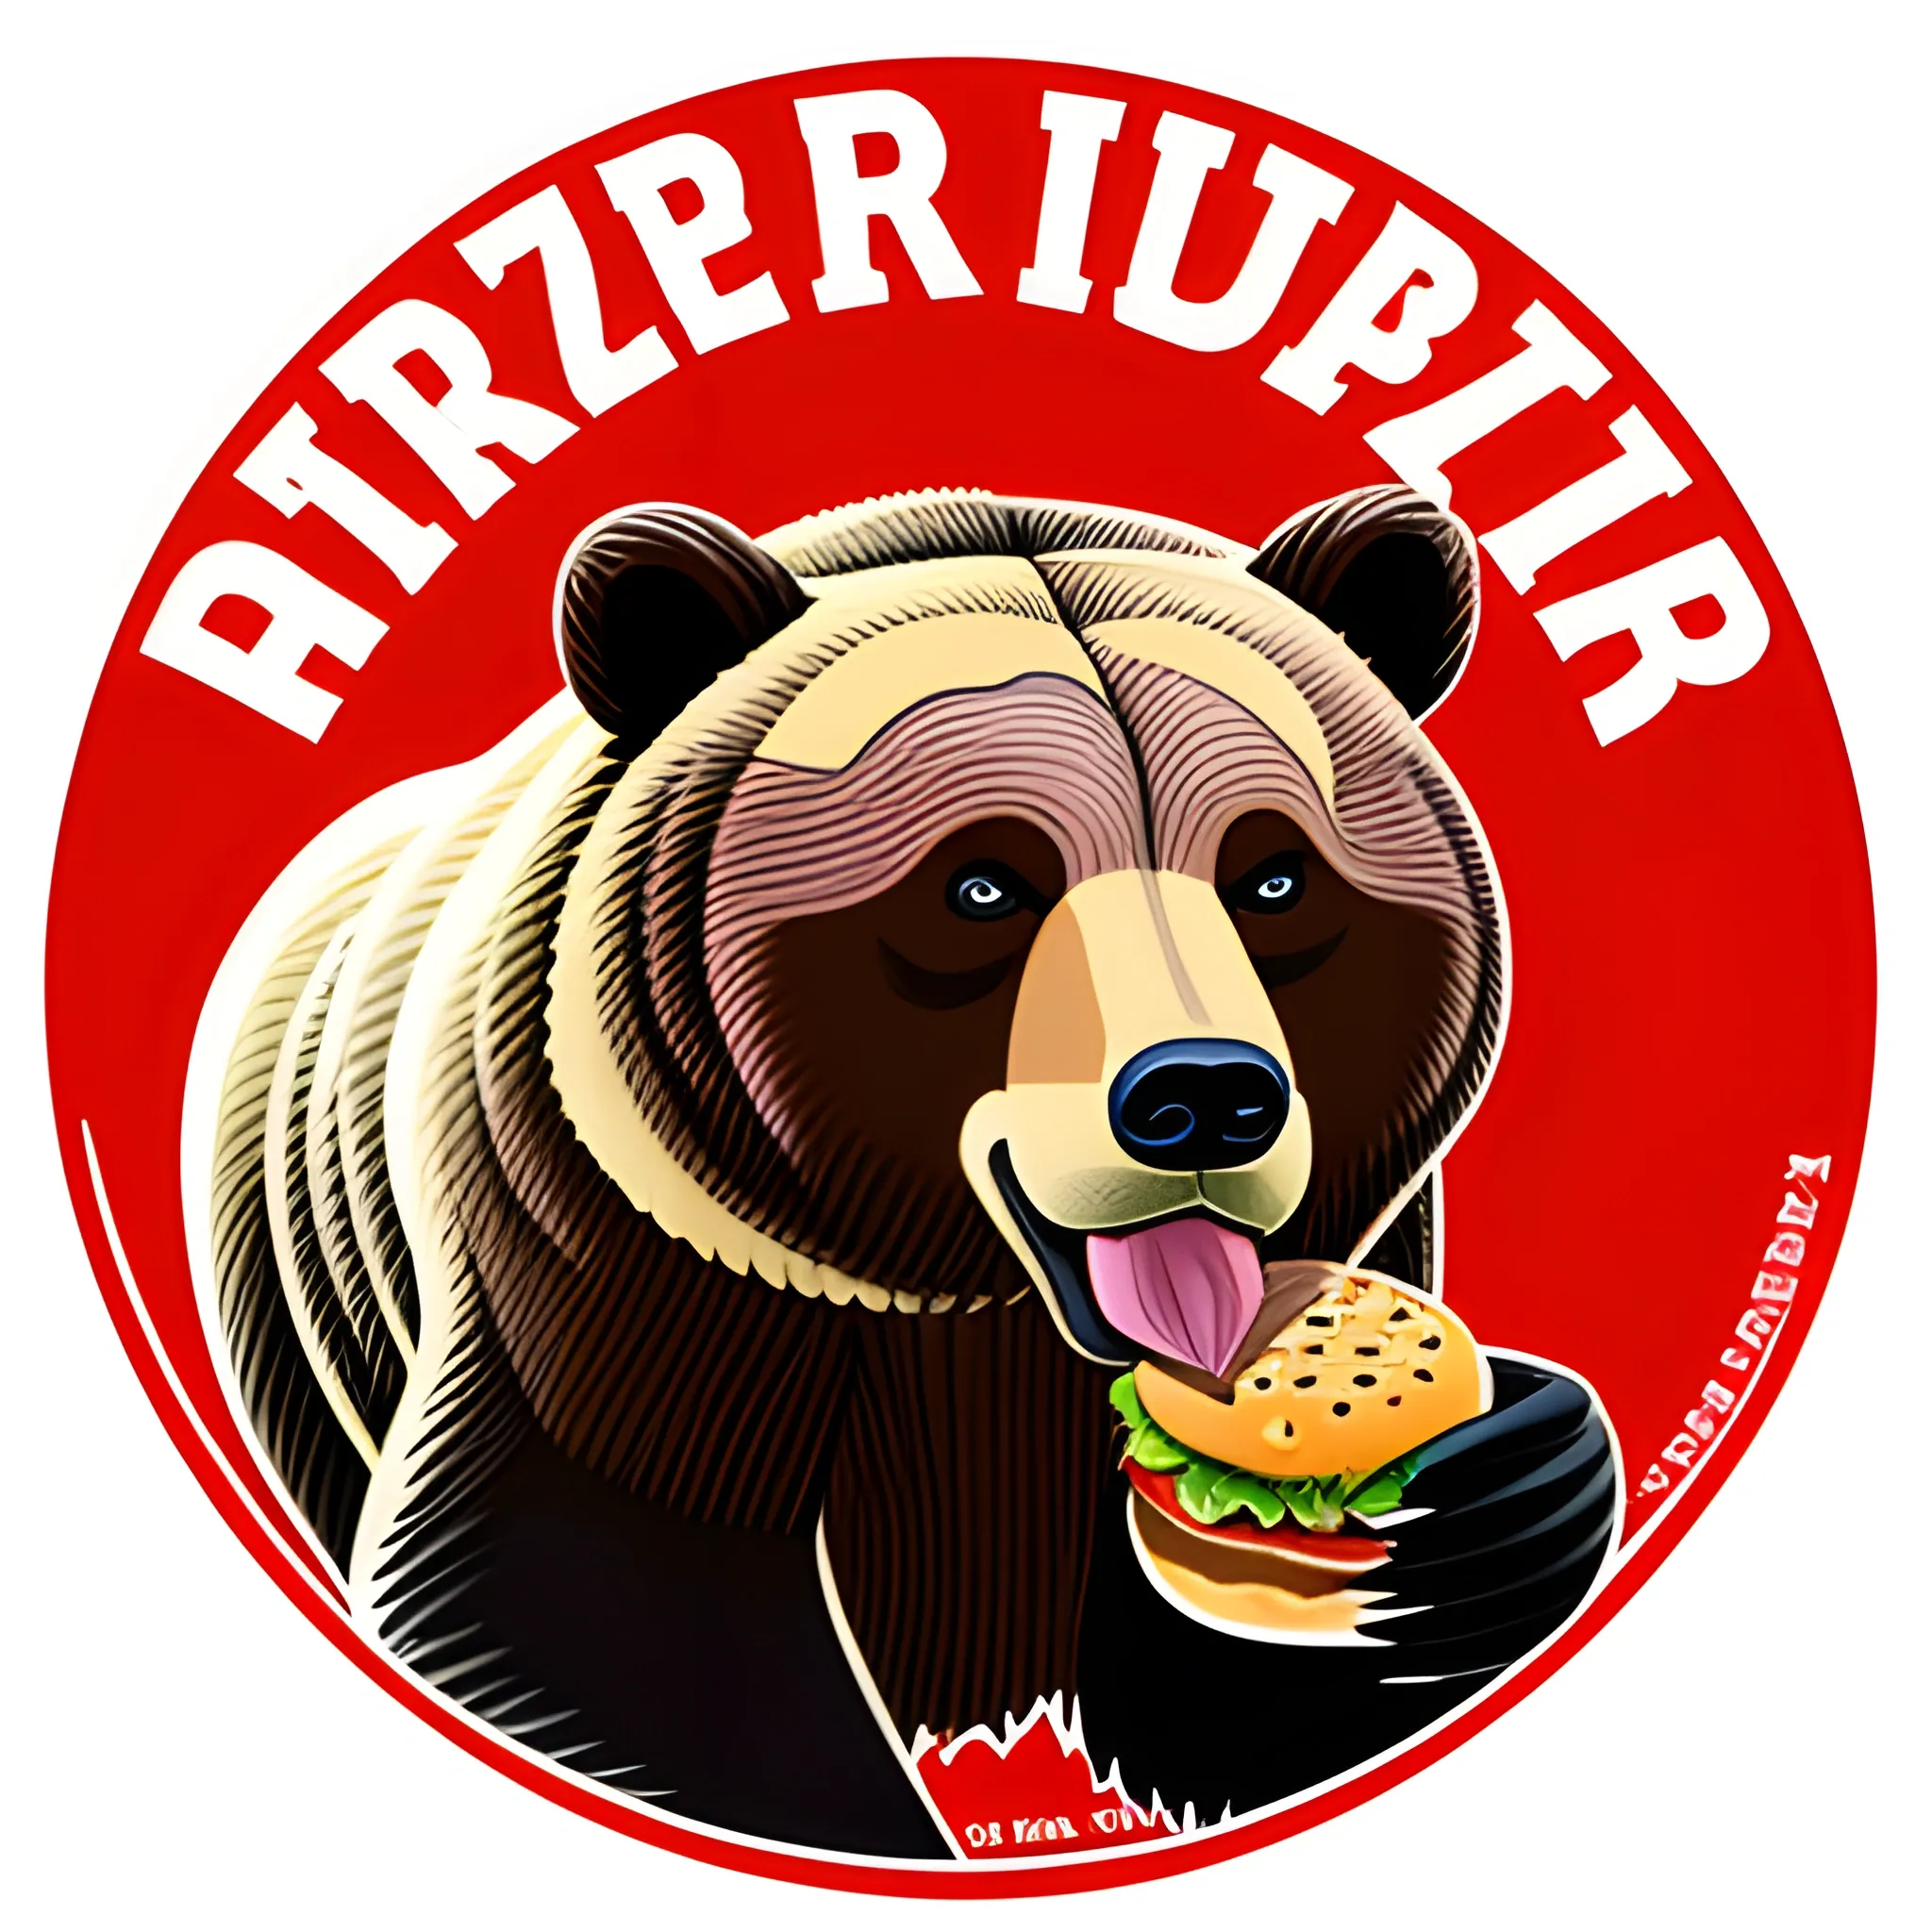 grizzly bear eating a hamburger logo style